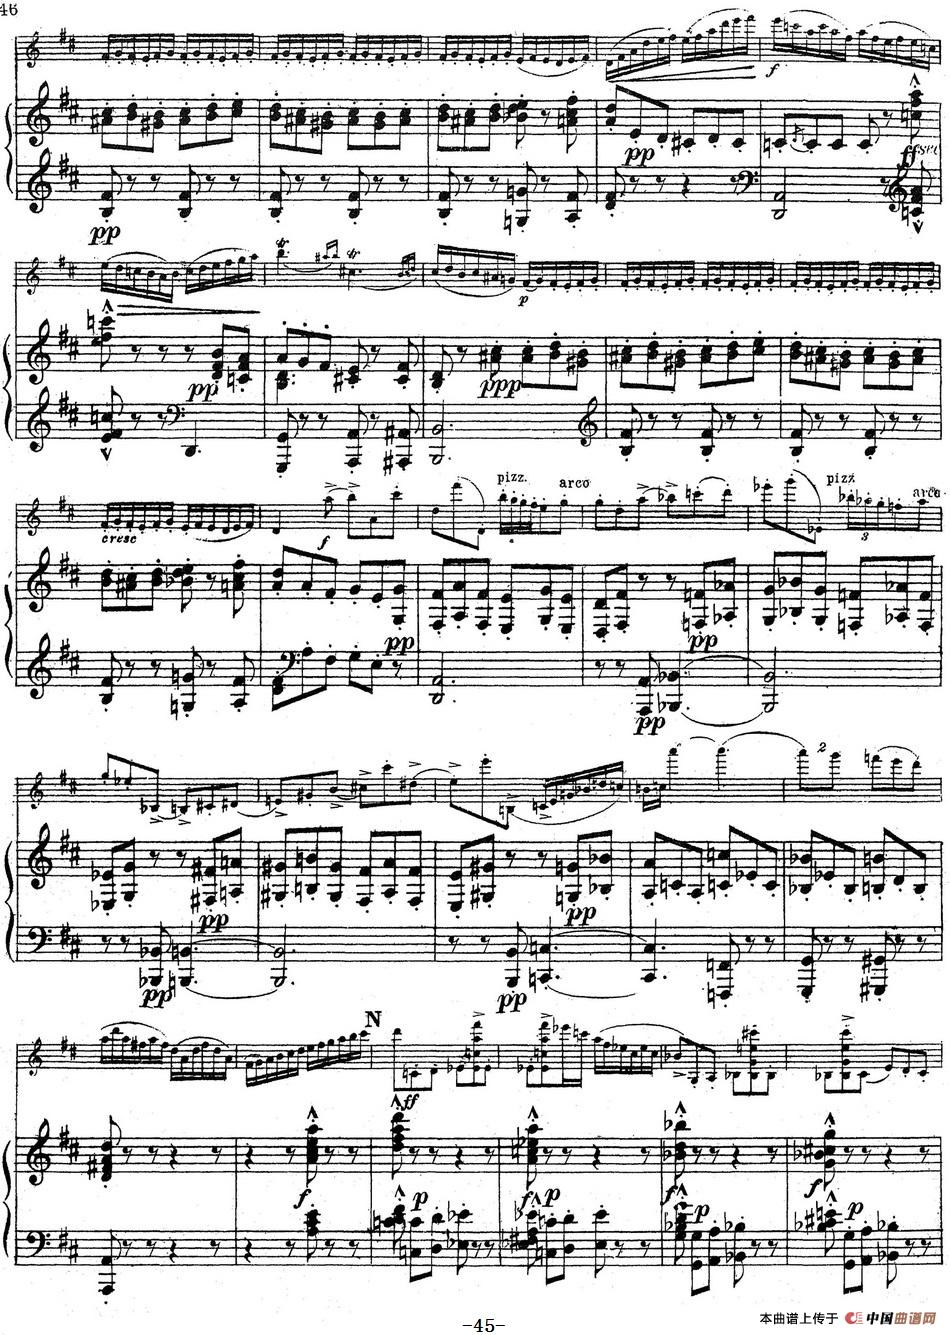 Symphonie Espagnole Op.21，No.5（西班牙交响曲）（小提